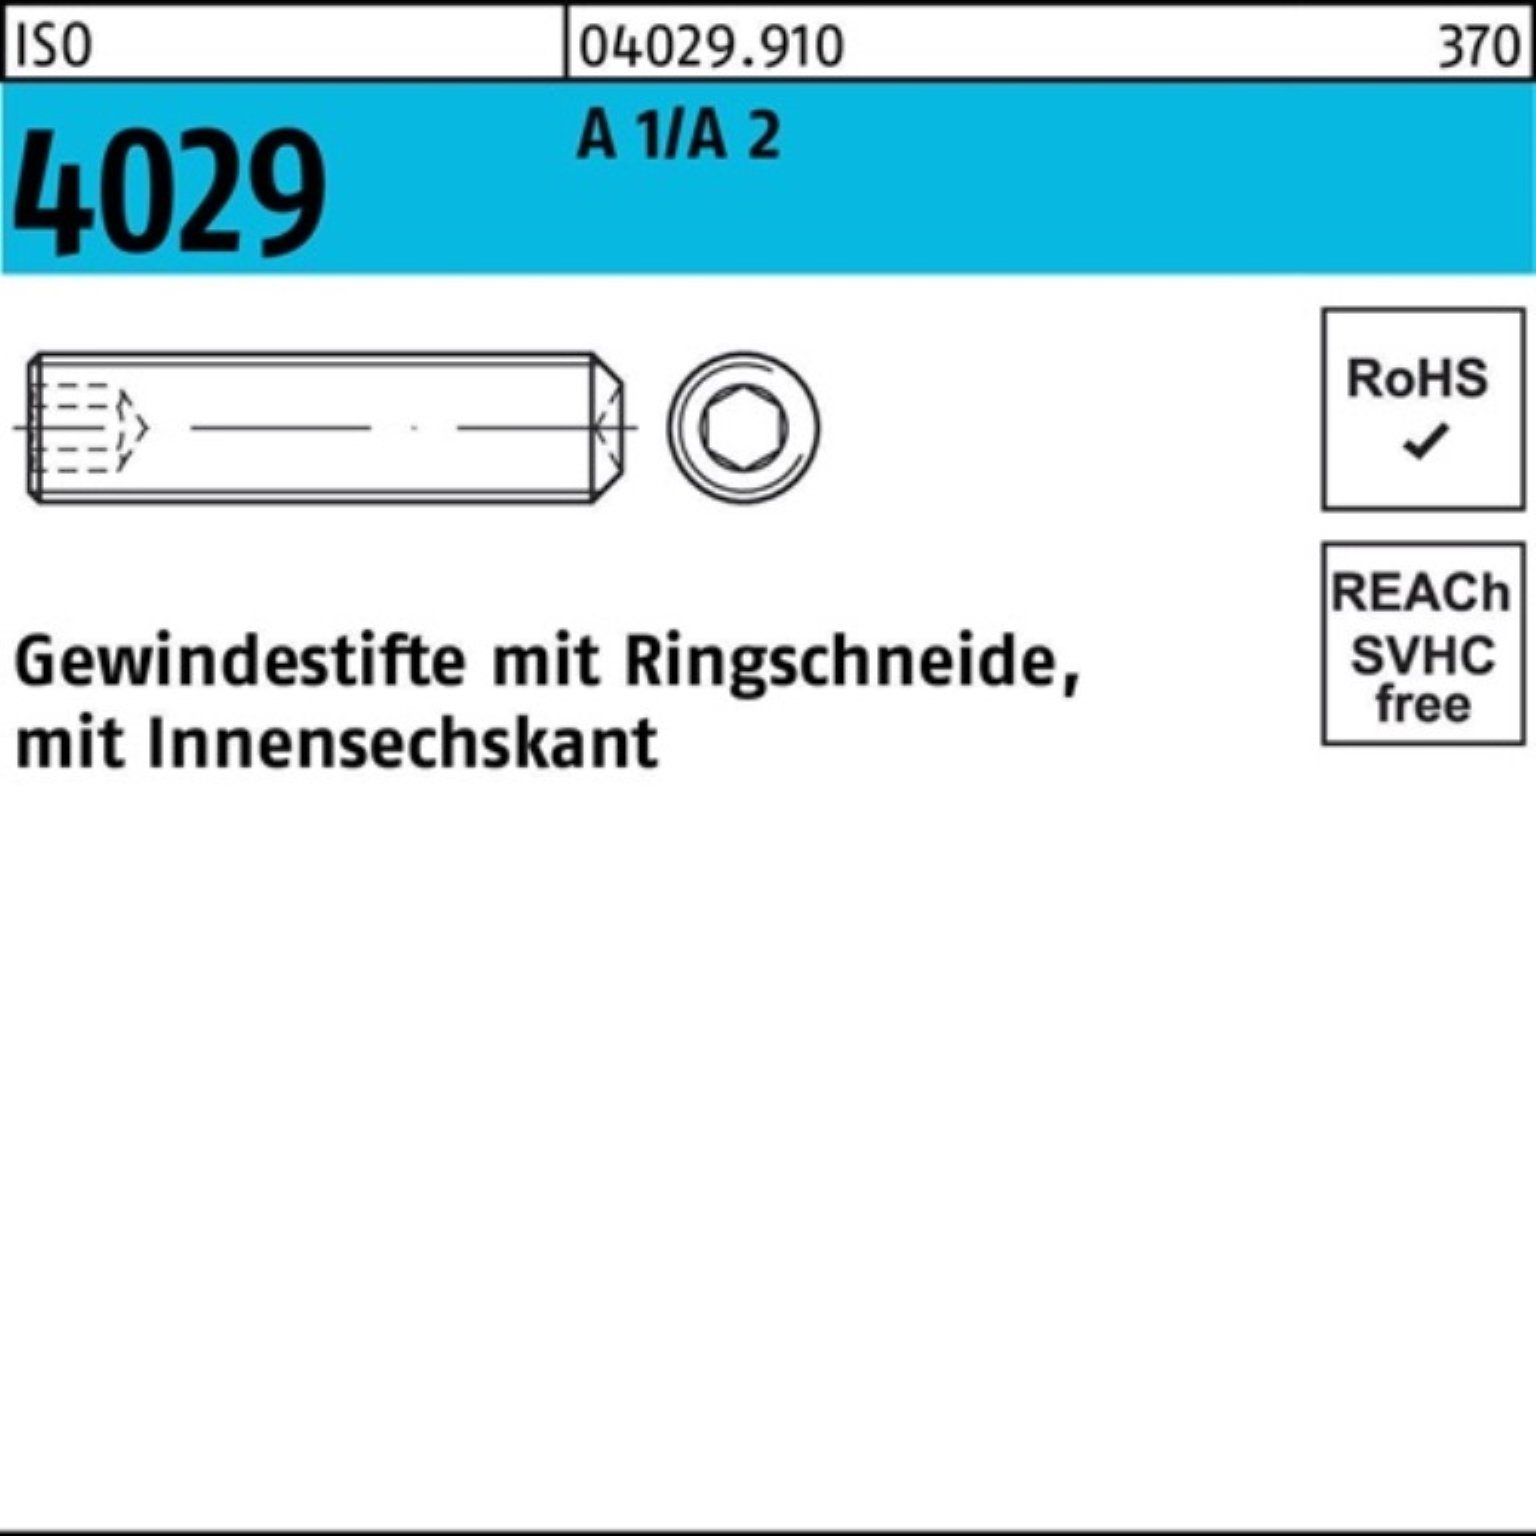 200 200er Gewindestift Pack Gewindebolzen M6x 4029 ISO Ringschneide/Innen-6kt Reyher A 2 30